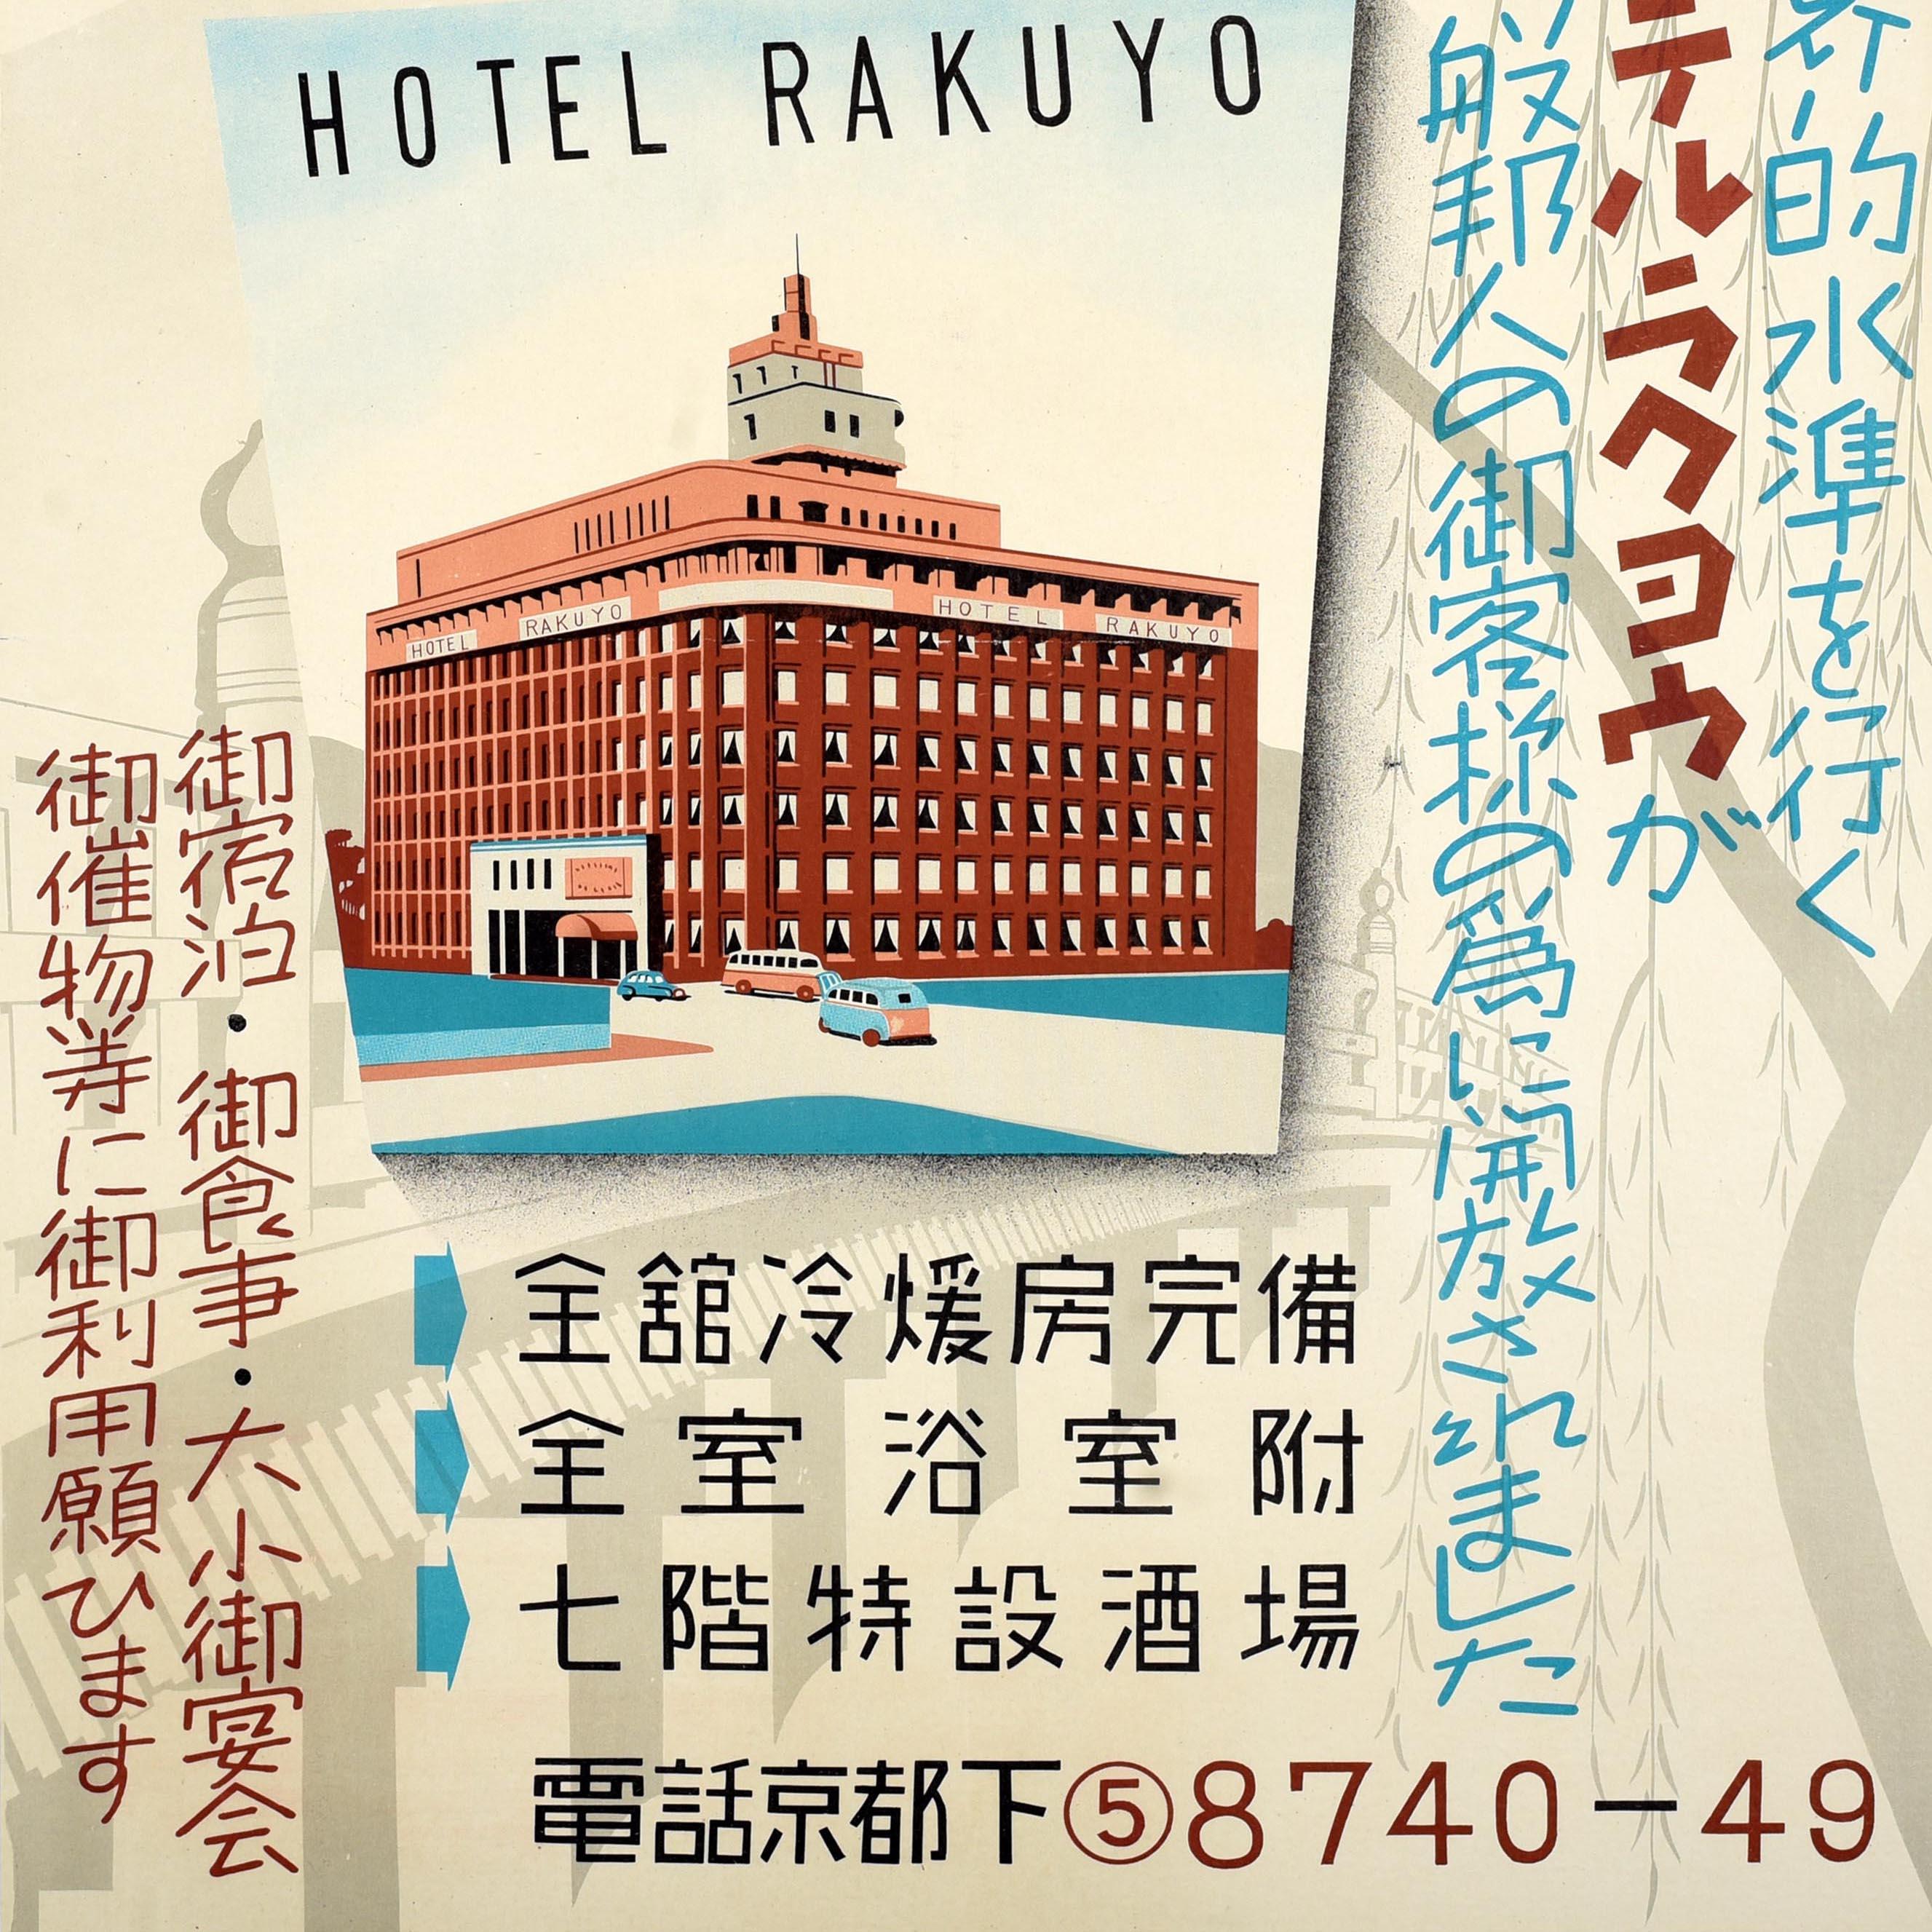 Mid-20th Century Original Vintage Japanese Travel Poster Hotel Rakuyo Kyoto Station Japan Asia For Sale